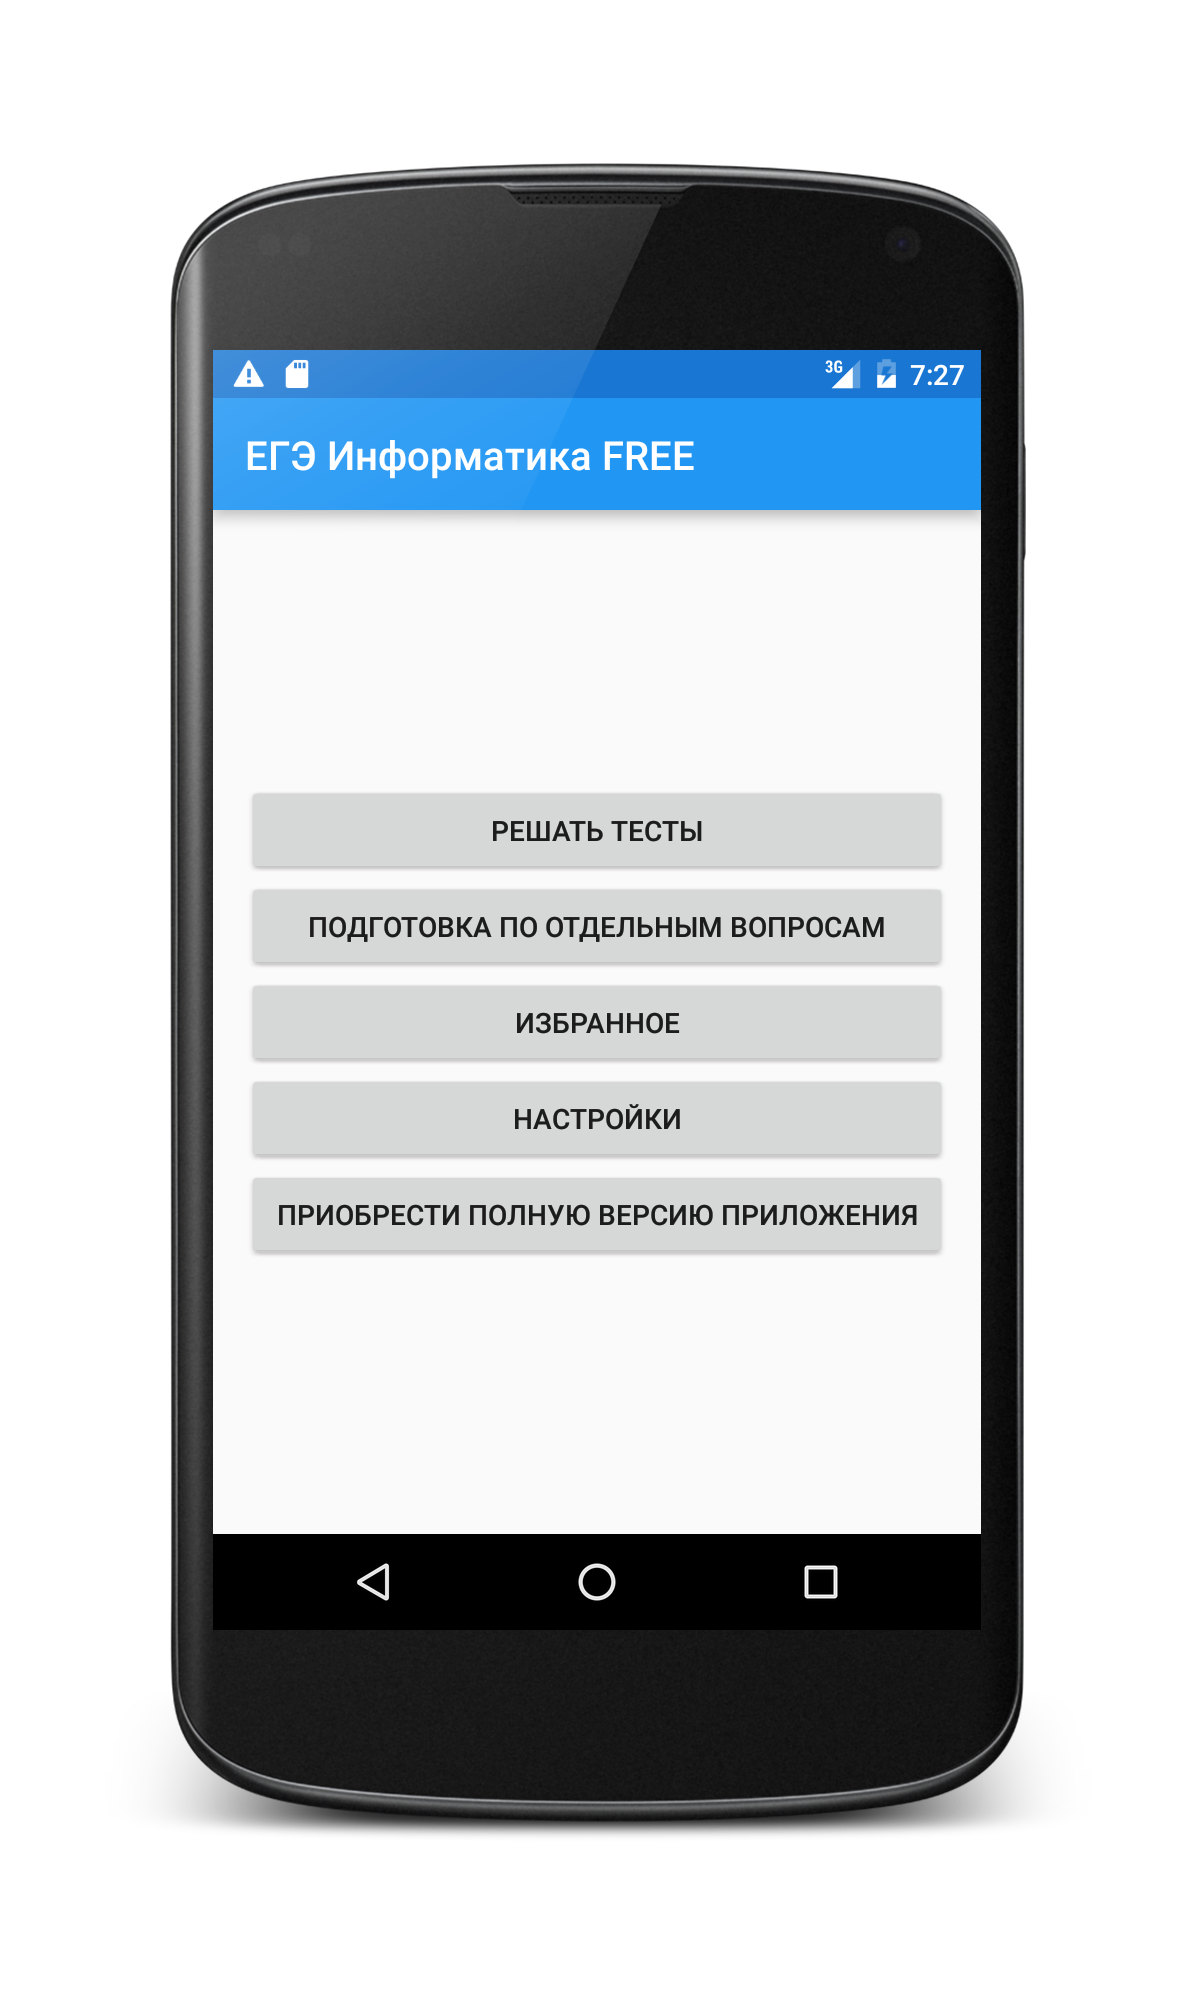 Android application ЕГЭ Информатика FREE screenshort